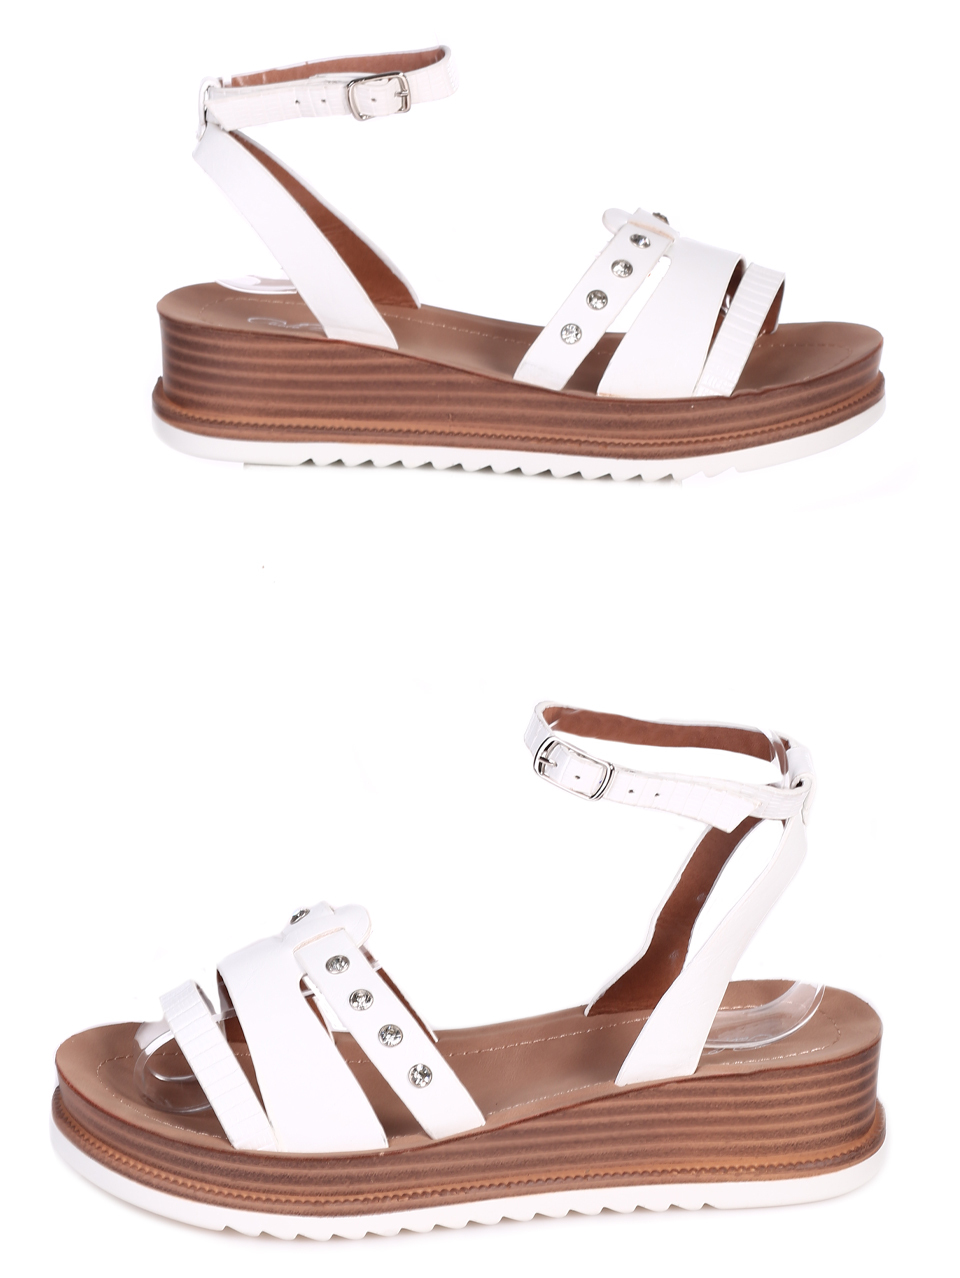 Ежедневни дамски сандали на платформа в бяло 4F-23257 white